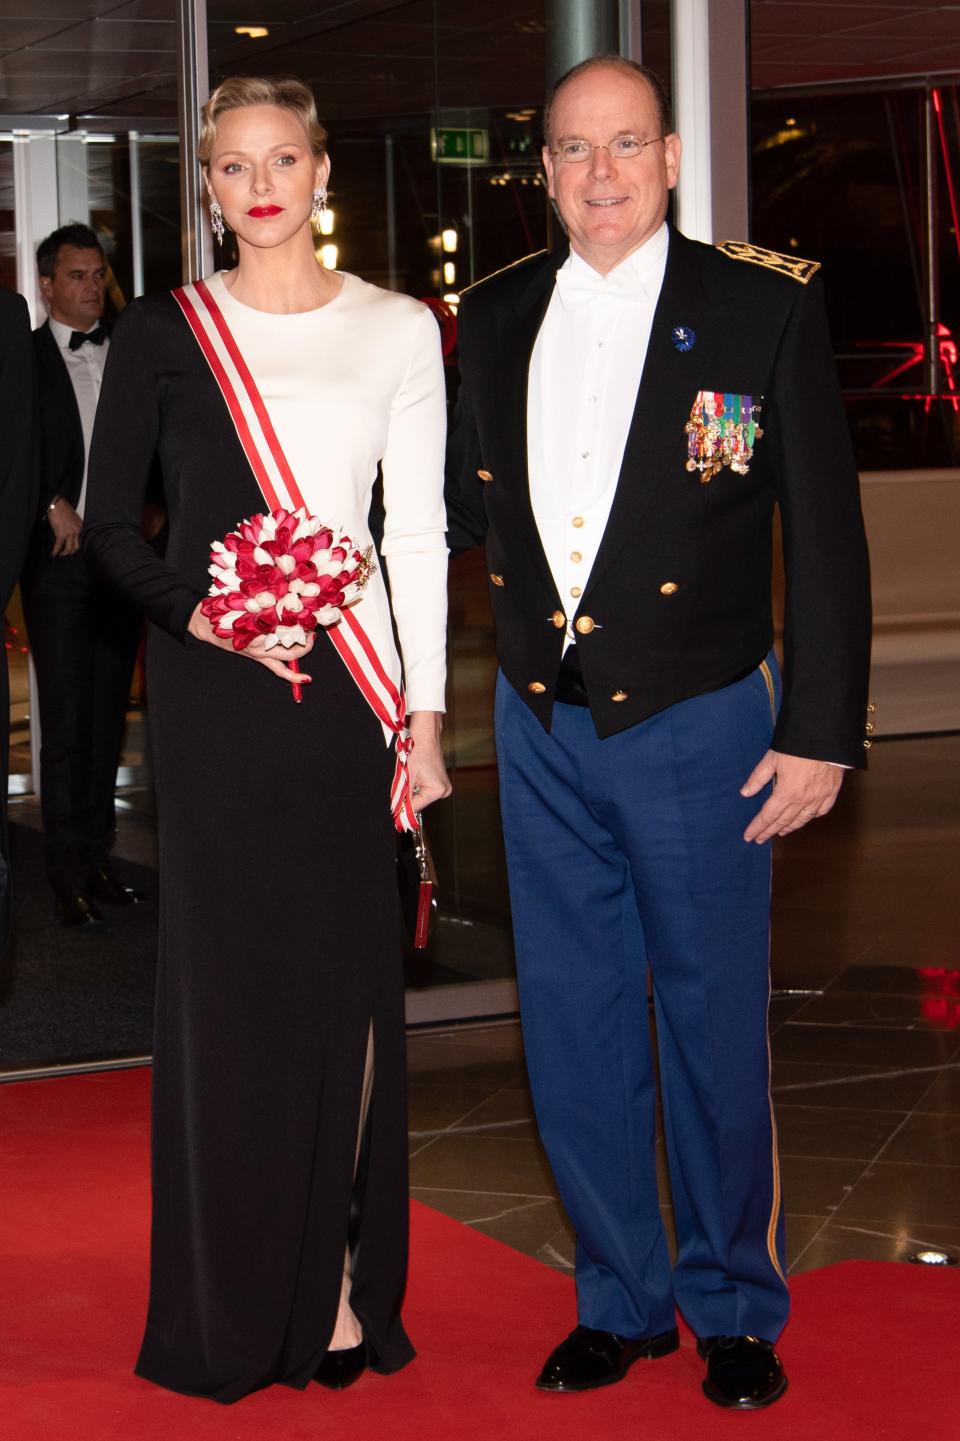 Princess Charlene of Monaco attends a gala in Monte Carlo in 2018